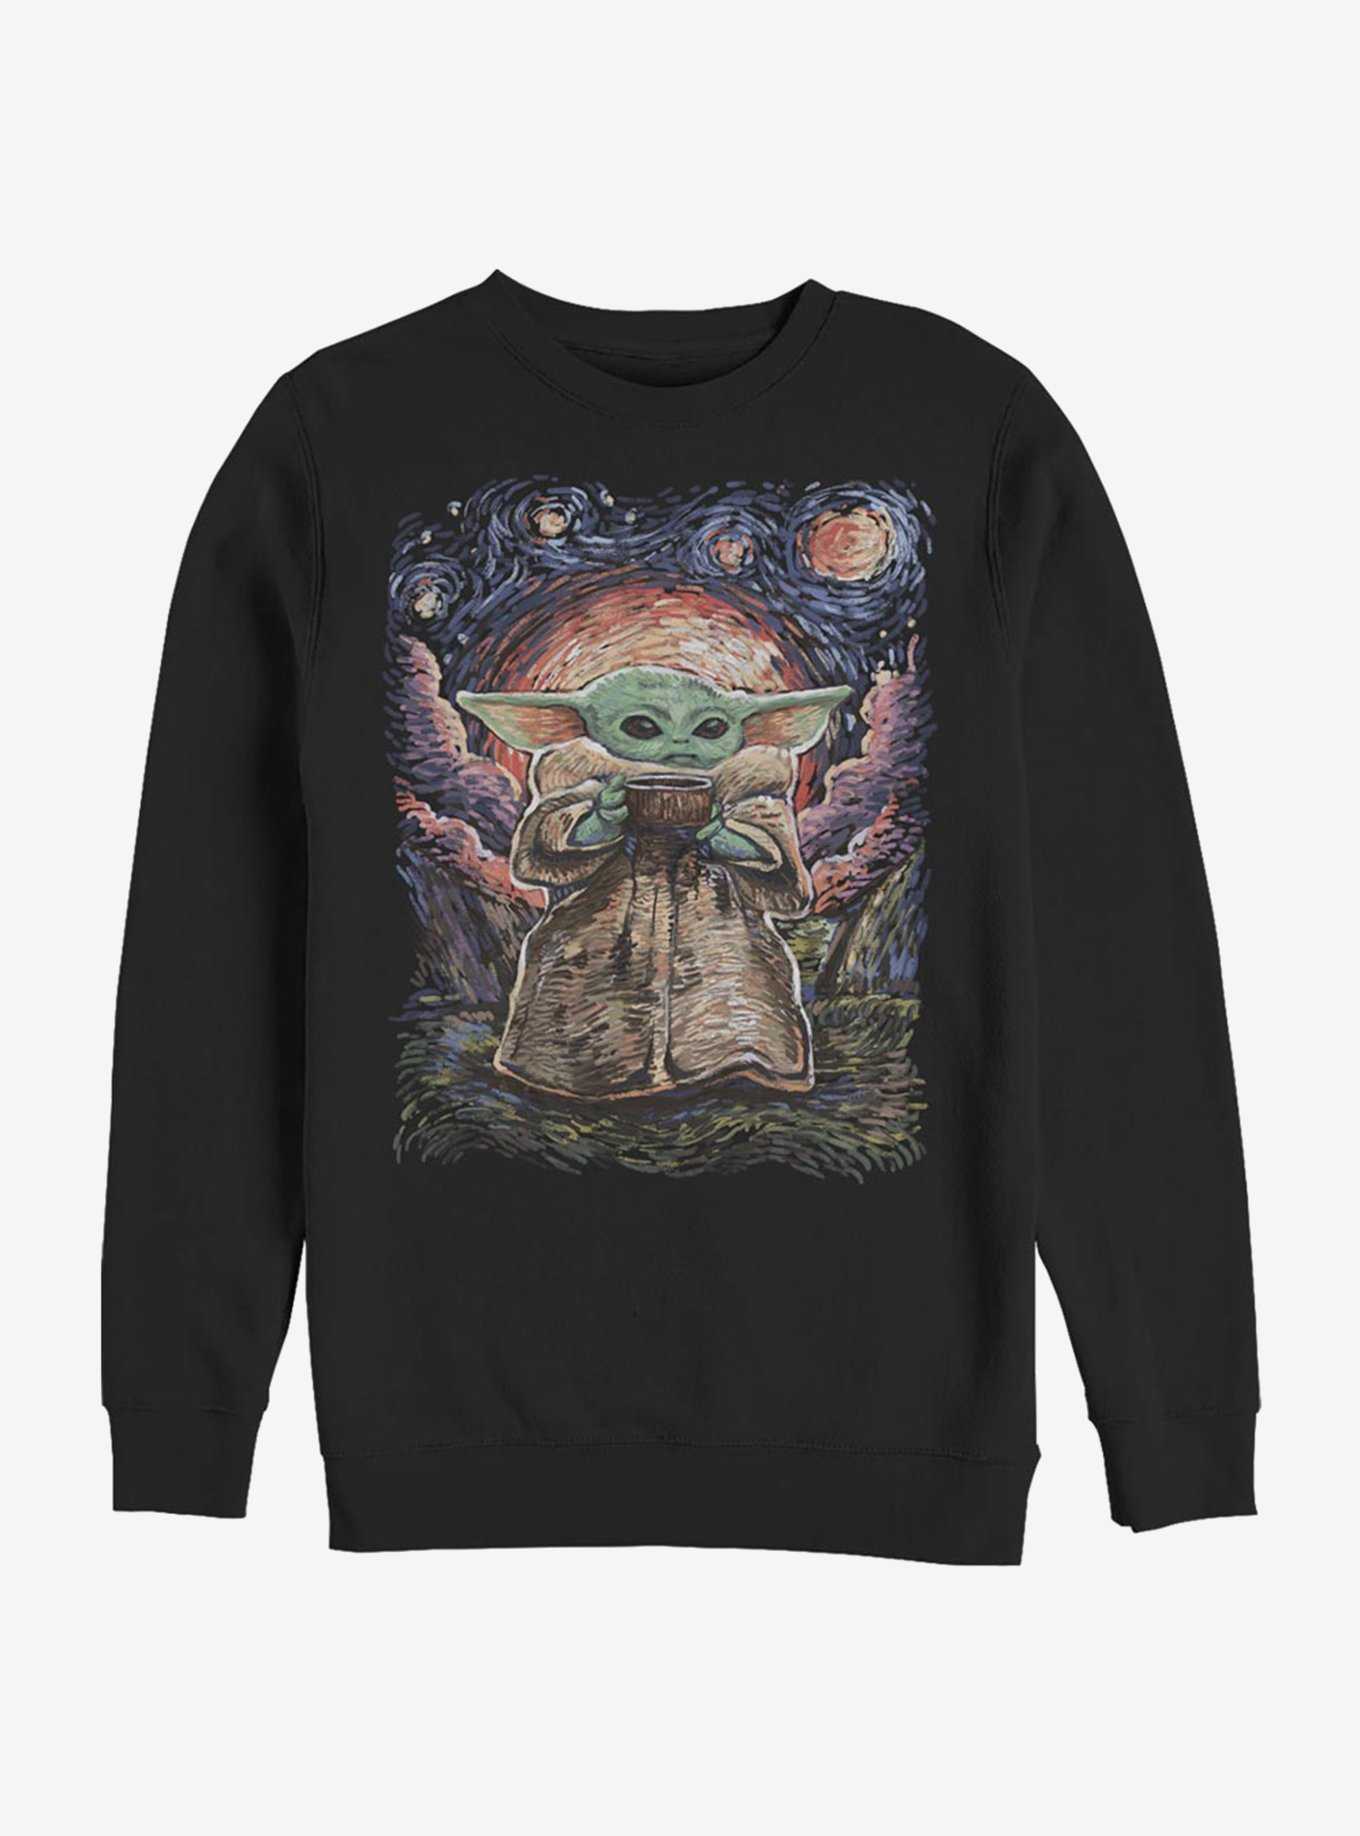 Star Wars The Mandalorian The Child Starry Night Sweatshirt, , hi-res